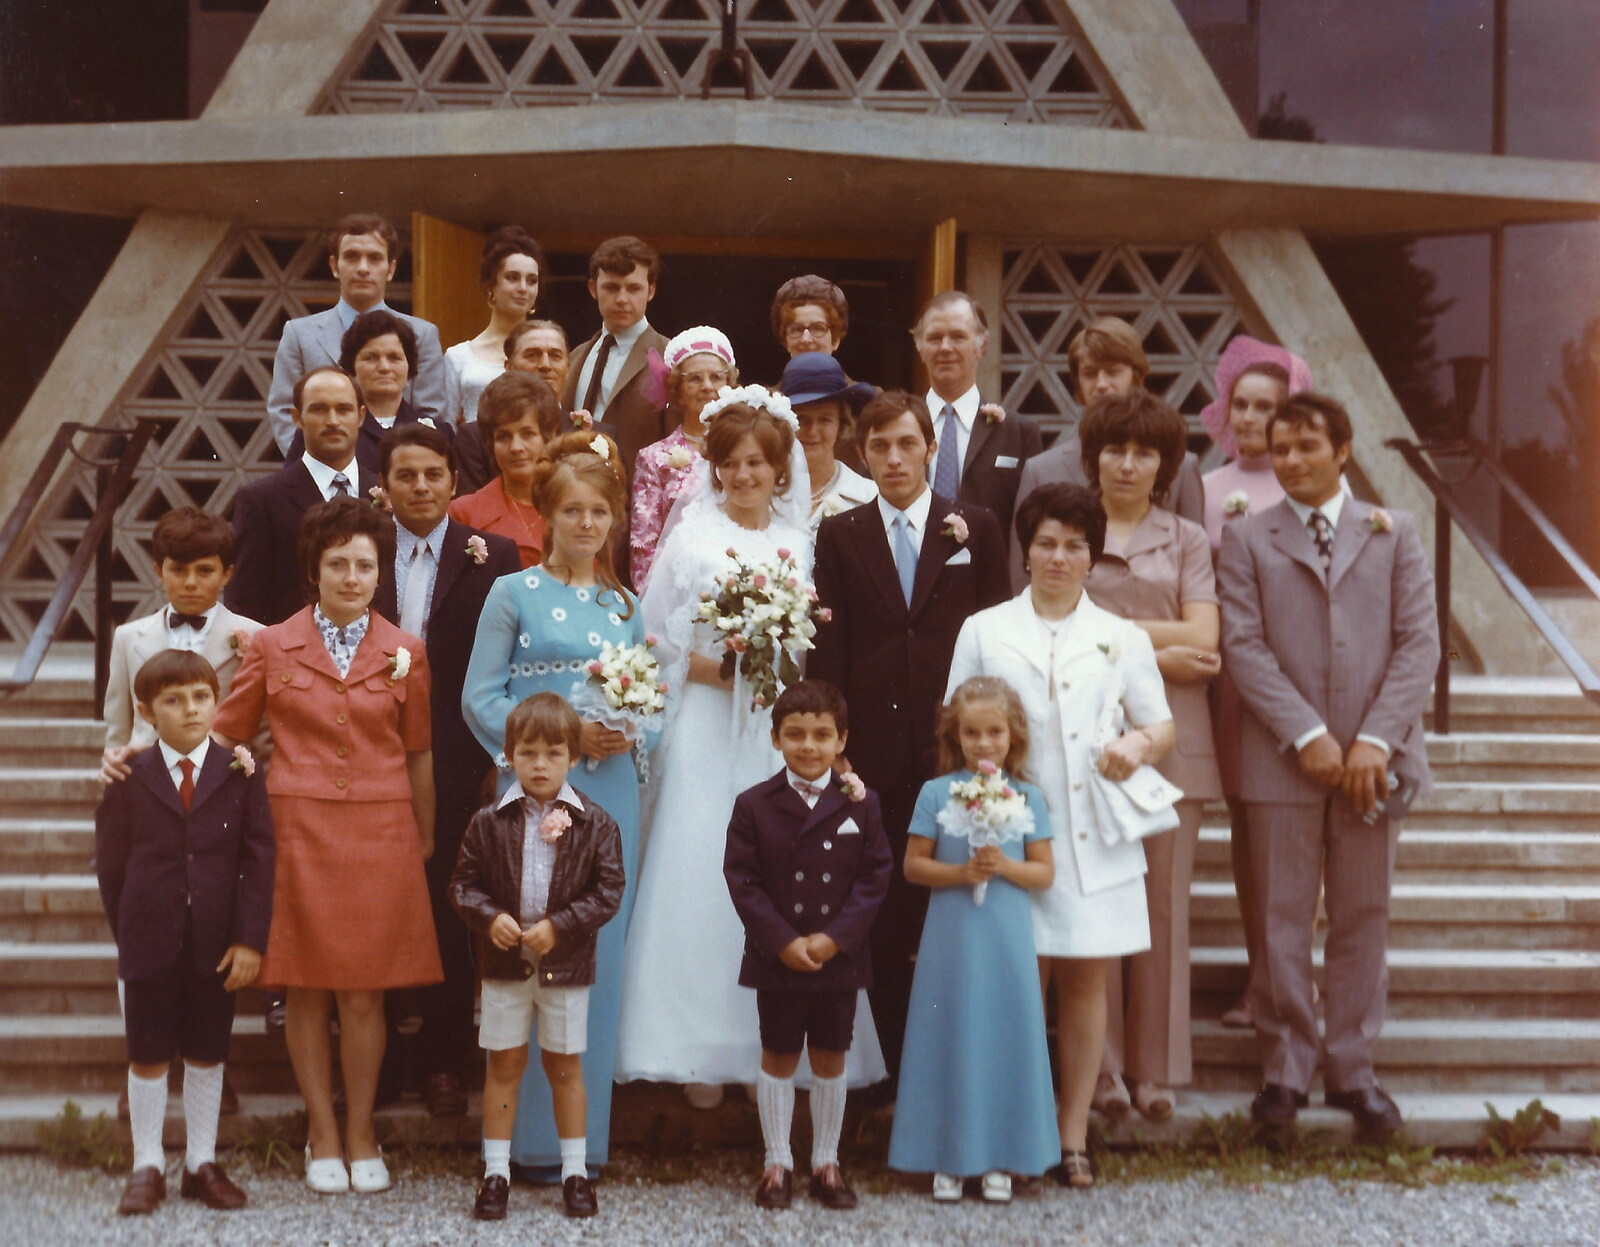 Family History: The 1960s - 24th January 2020: Wedding group photo